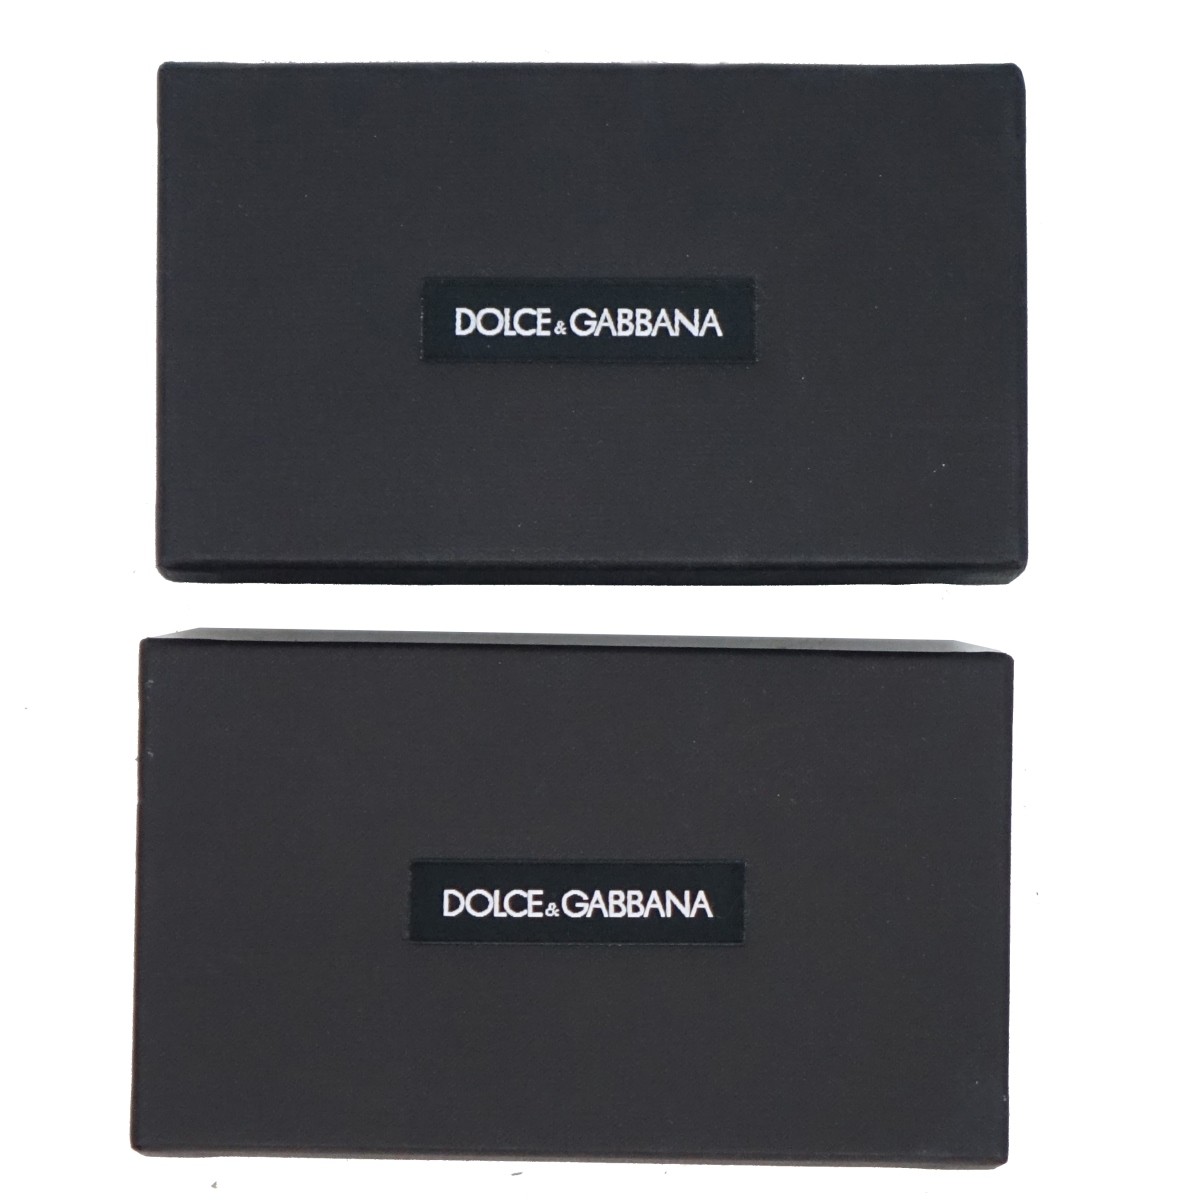 Dolce & Gabbana Iphone 6 Cases